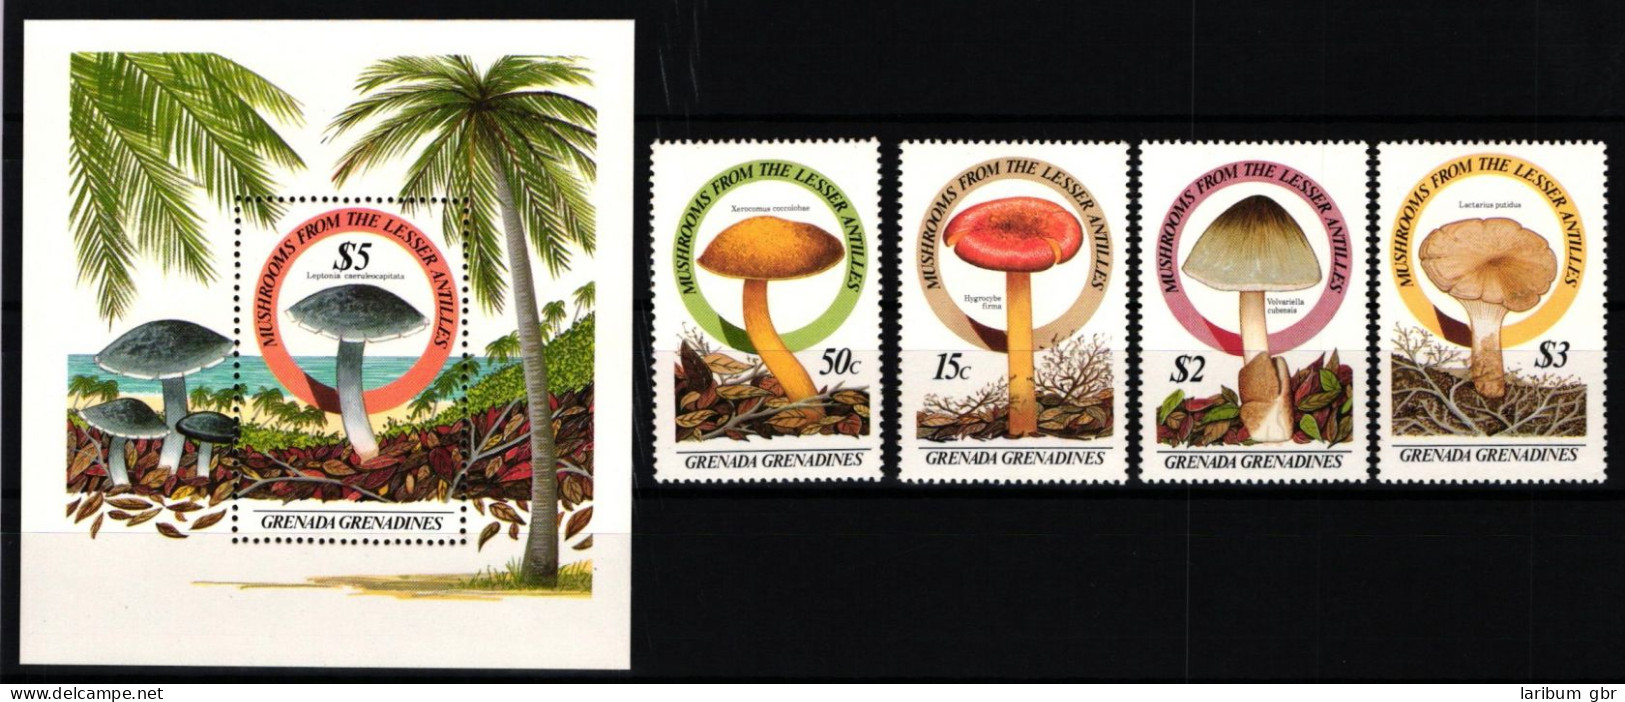 Grenada Grenadinen 771-774 Und Block 111 Postfrisch Pilze #JA761 - St.Vincent Y Las Granadinas